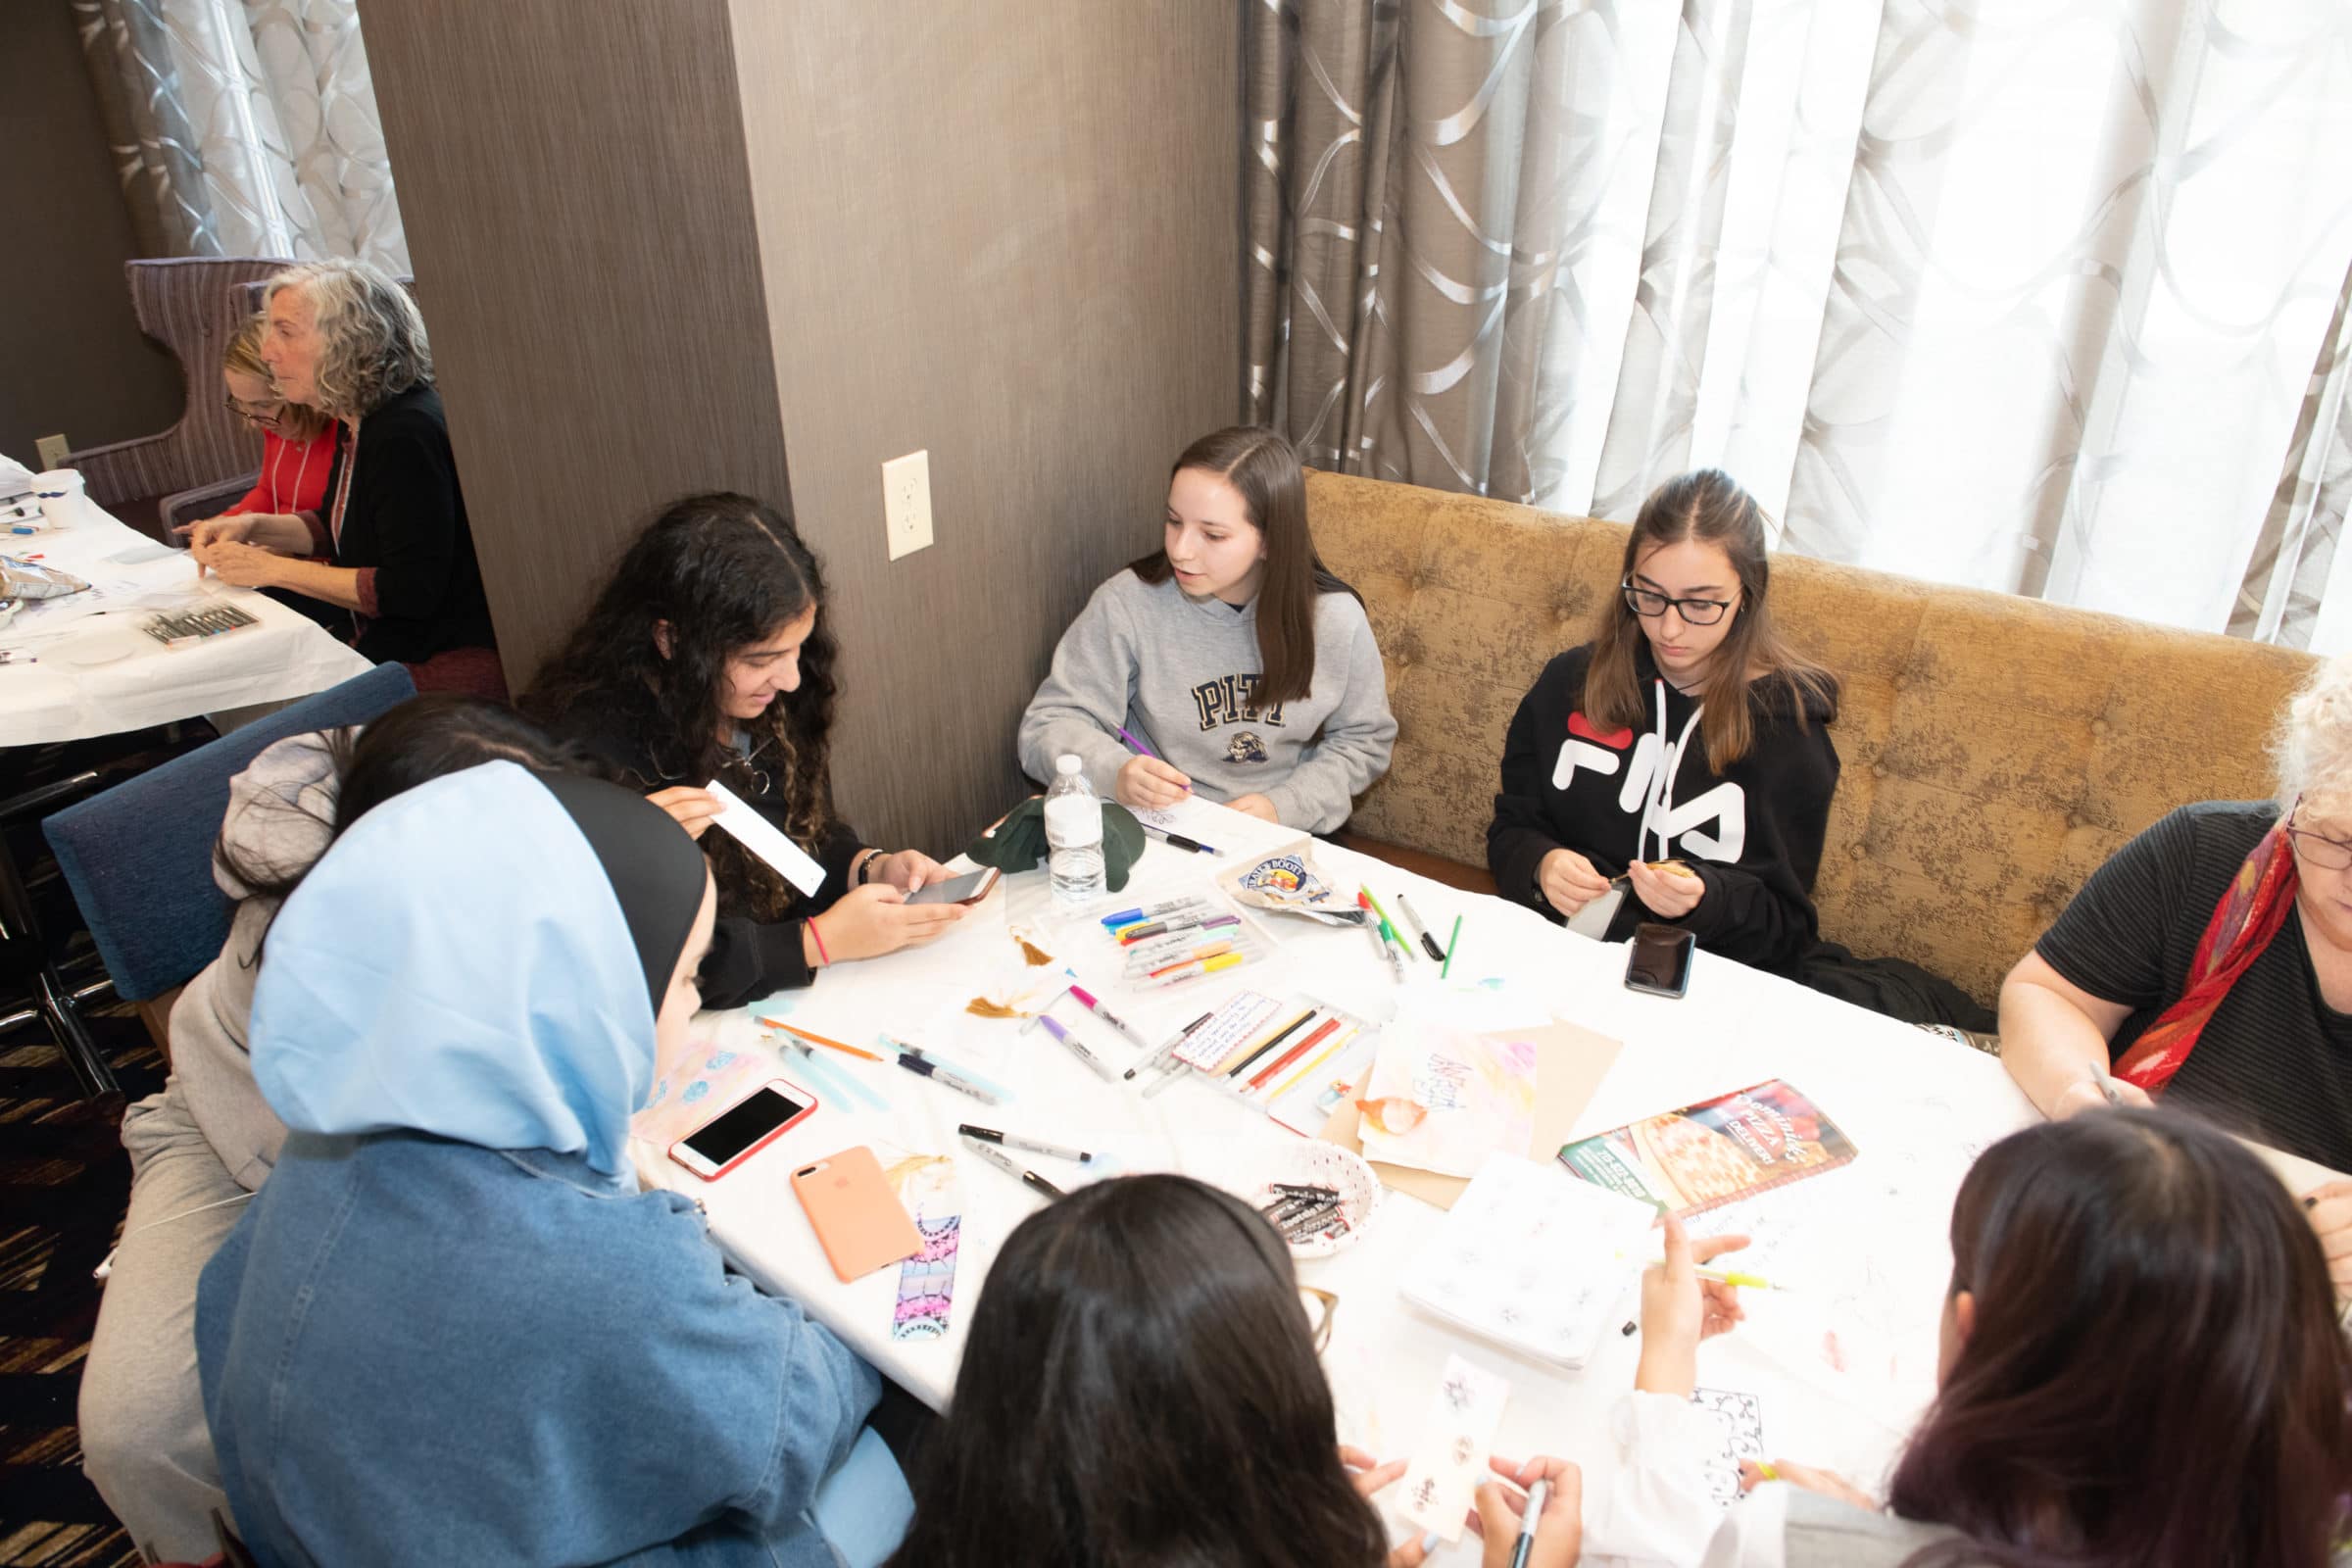 teens gathered around a table creating artwork